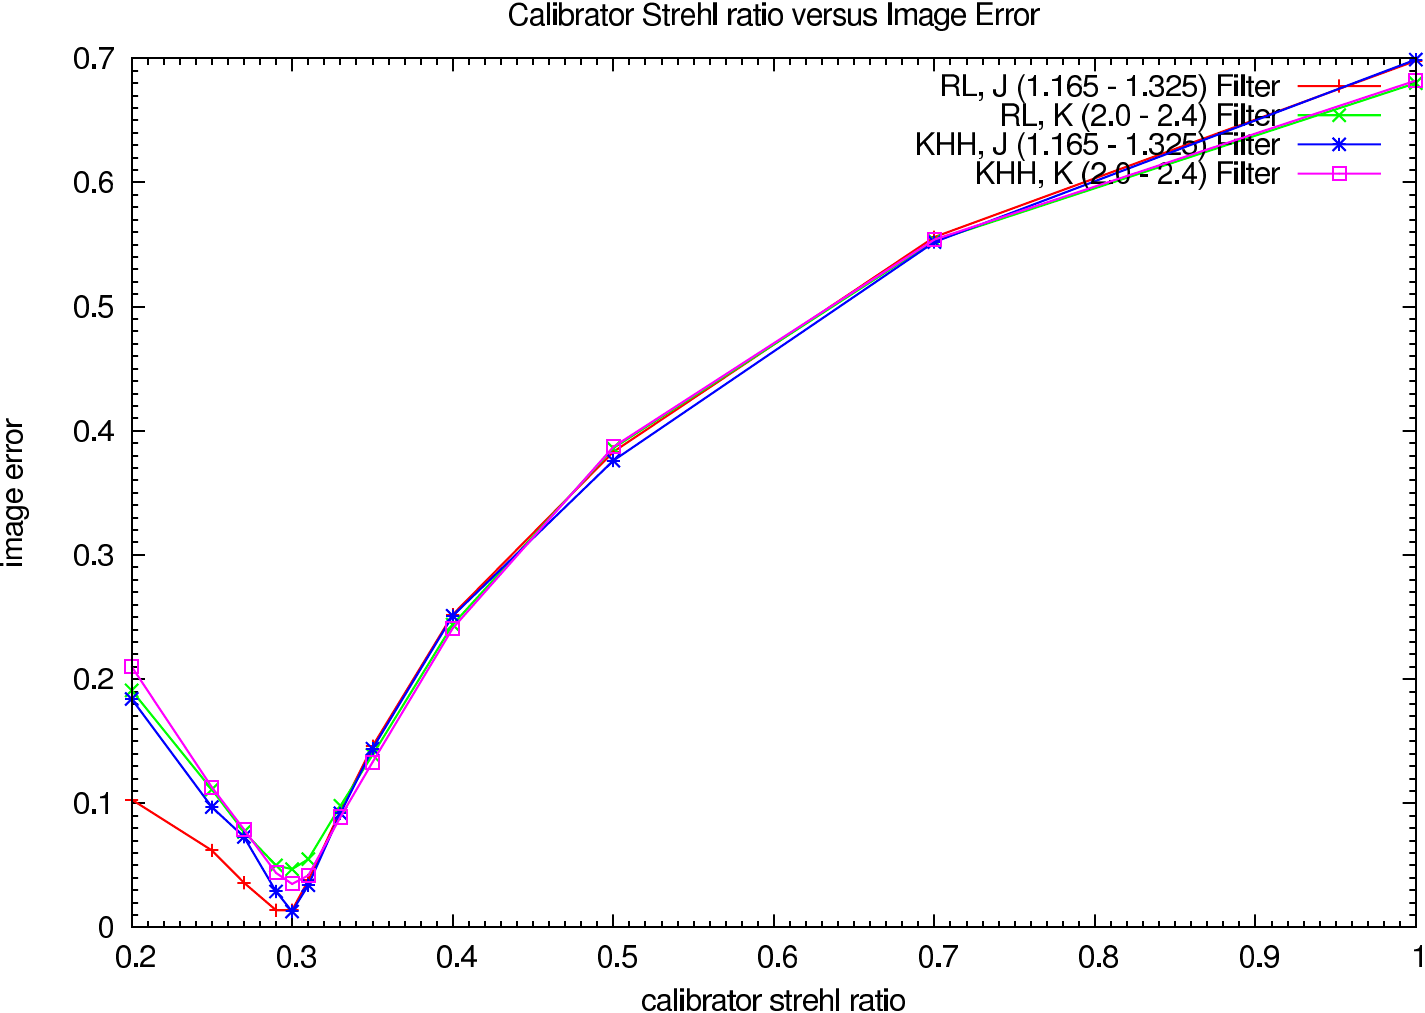 Image errors depending on the calibrator strehl ratio